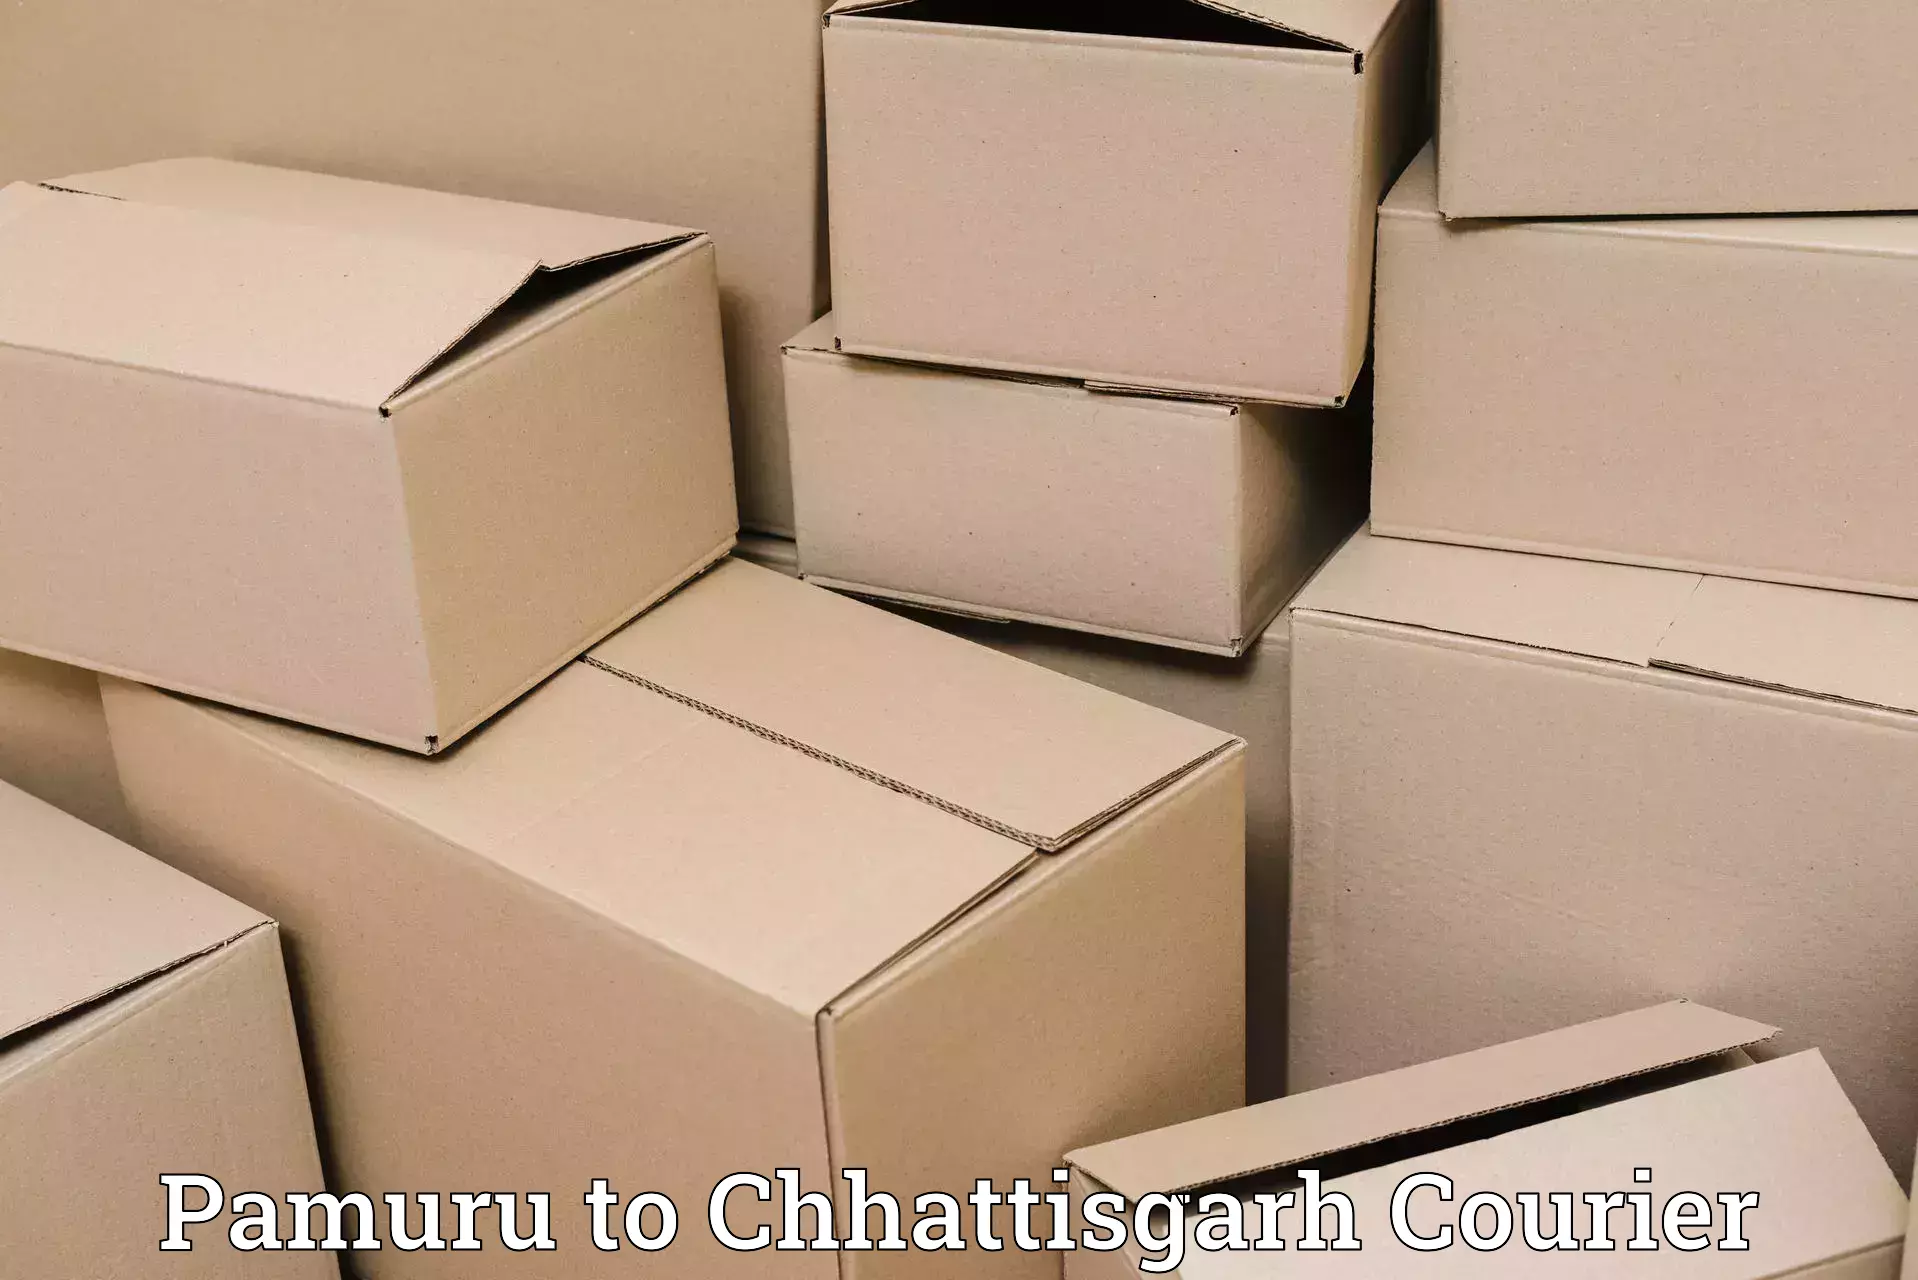 Courier service partnerships Pamuru to Chhattisgarh